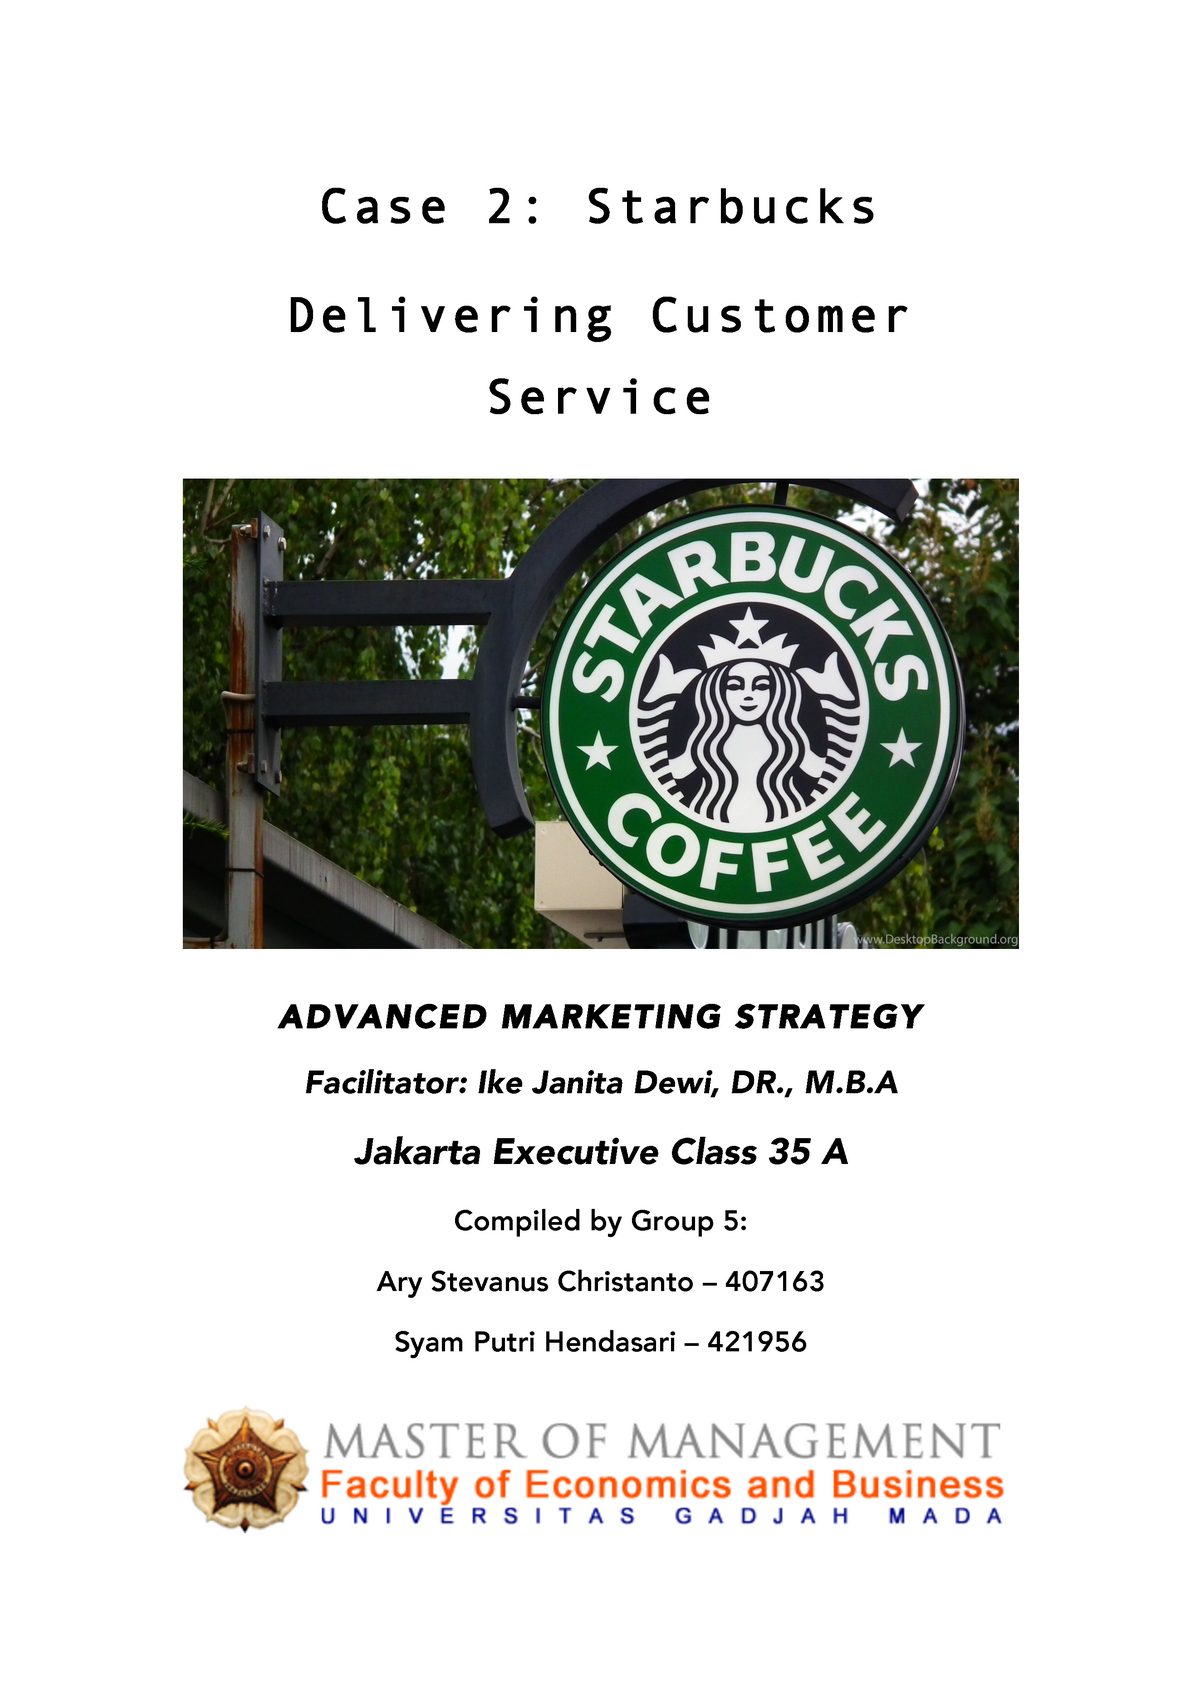 starbucks delivering customer service harvard case study analysis